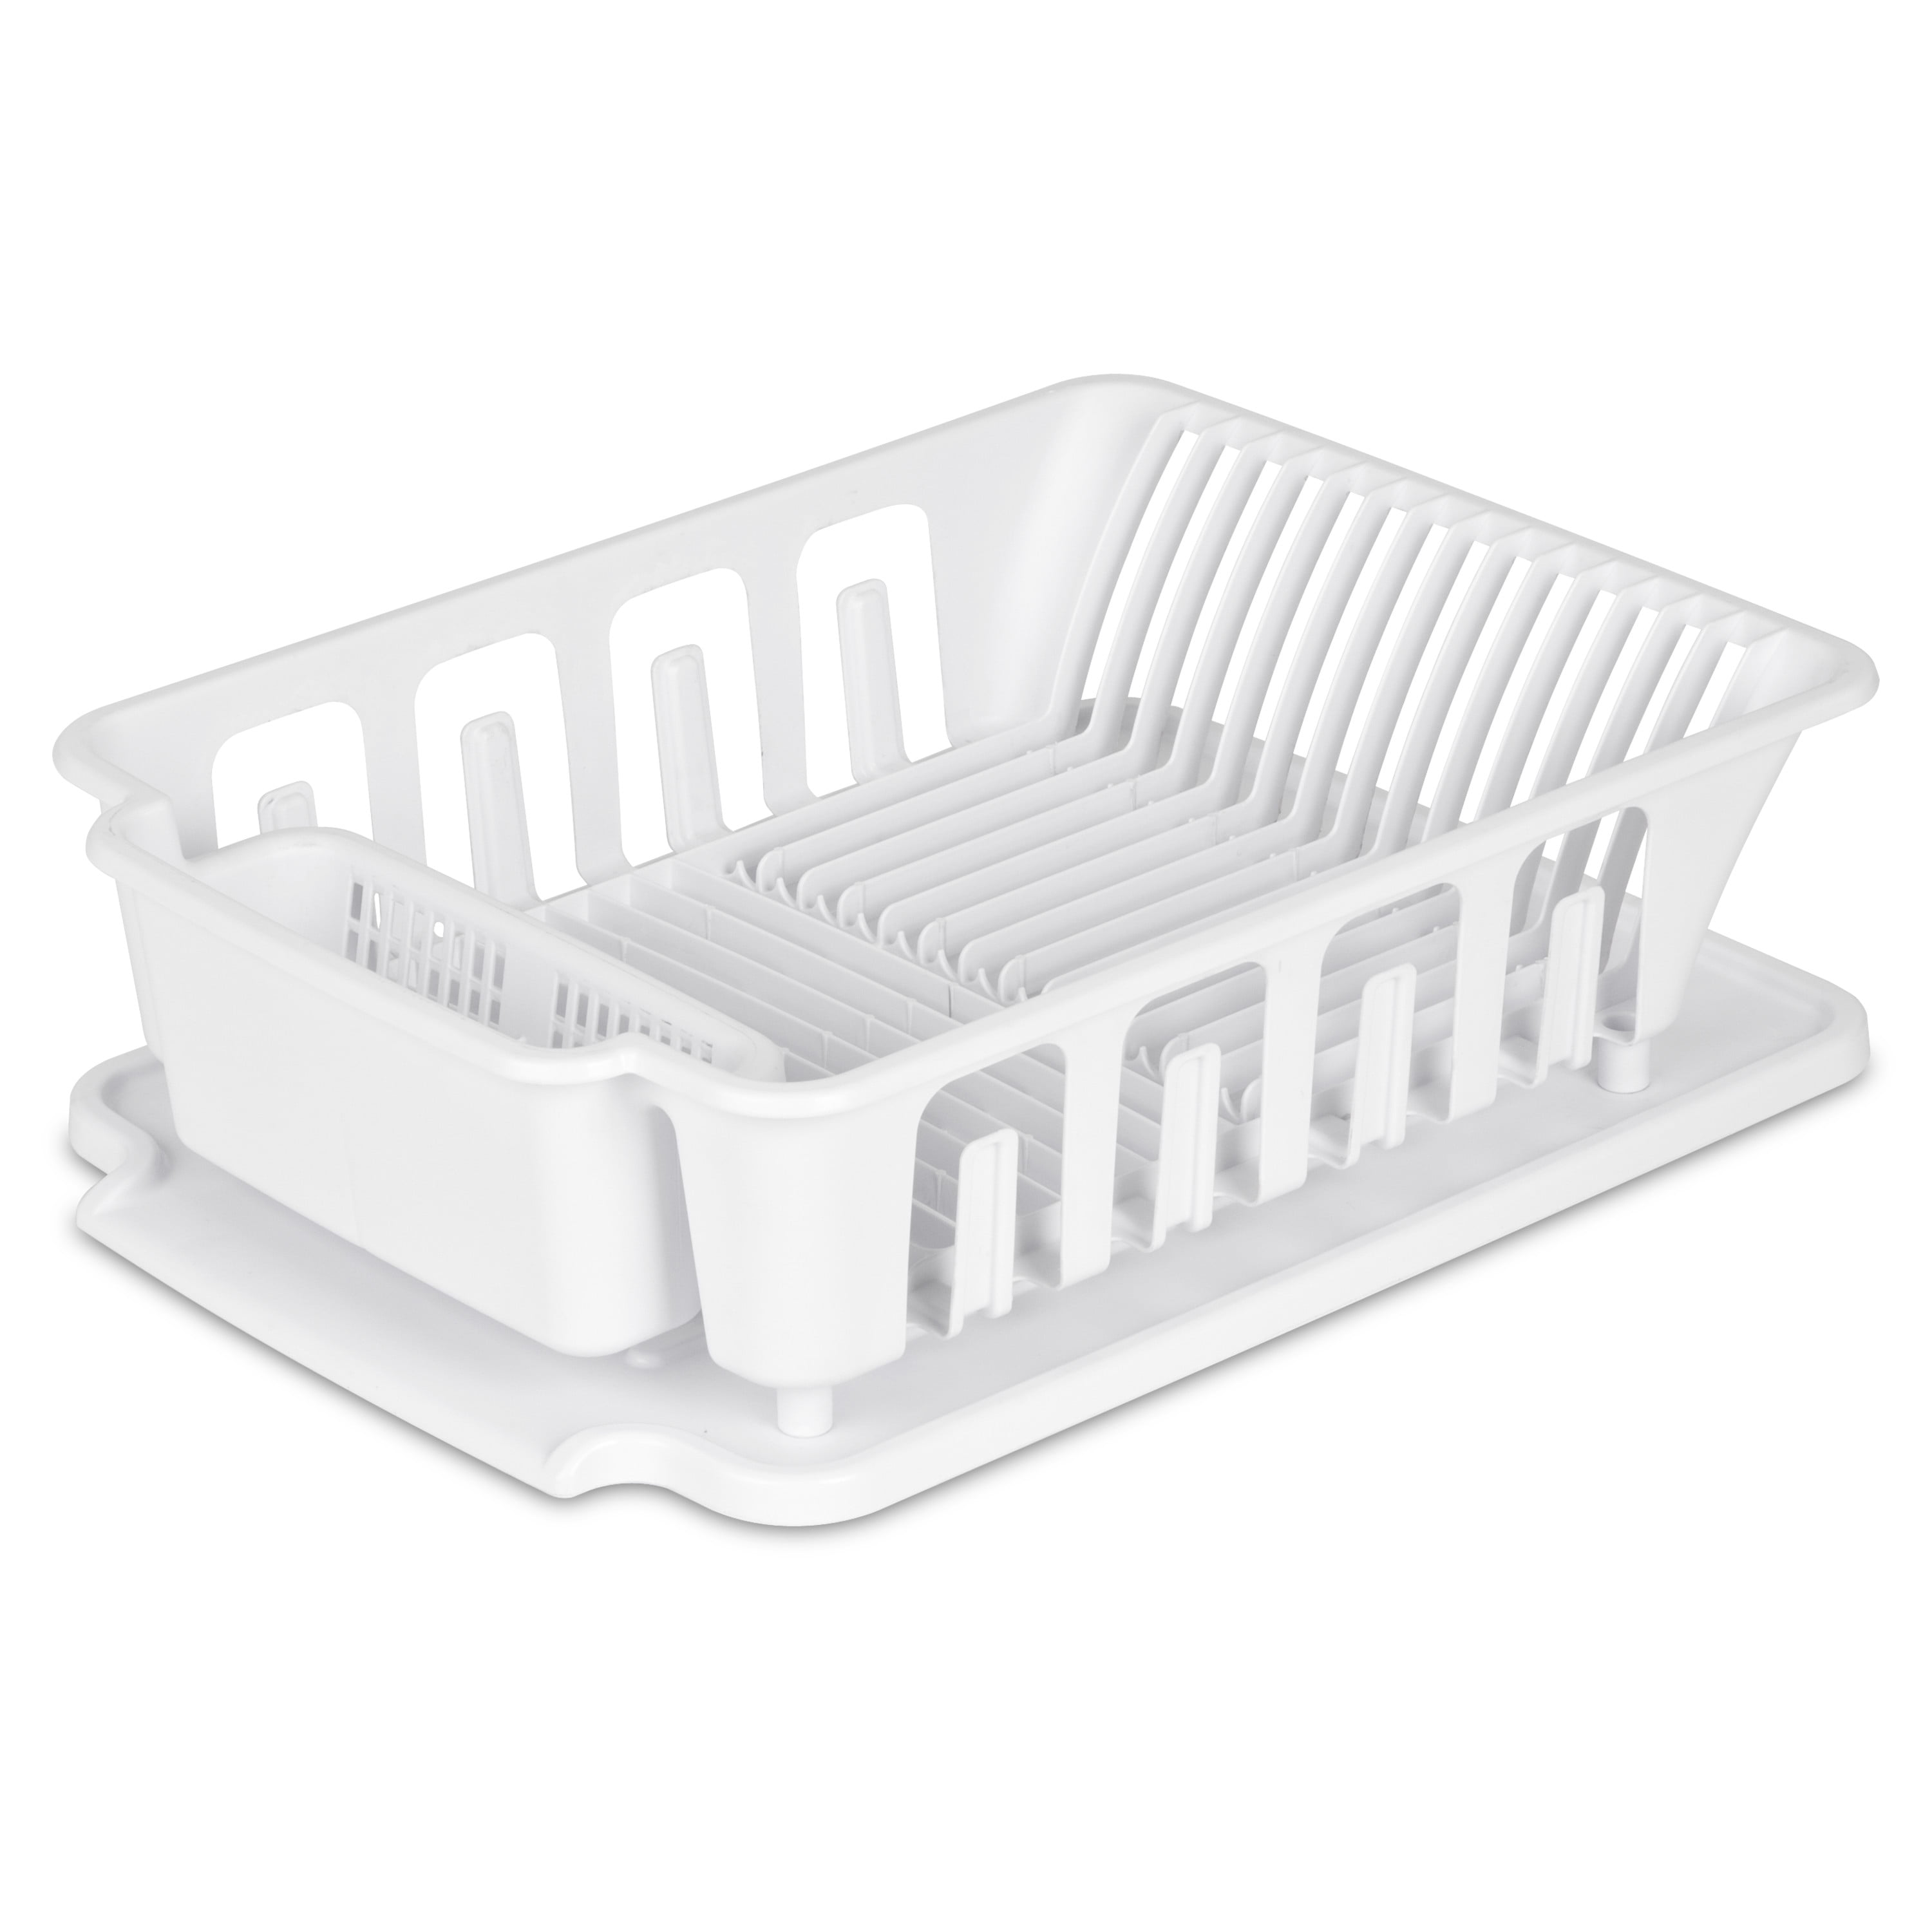 PLASTIFIC Plastic Dish Drainer Plate Cutlery Rack Kitchen Sink Utensil Draining Cup Holder 45 x 29.7 x 8cm, Transparent